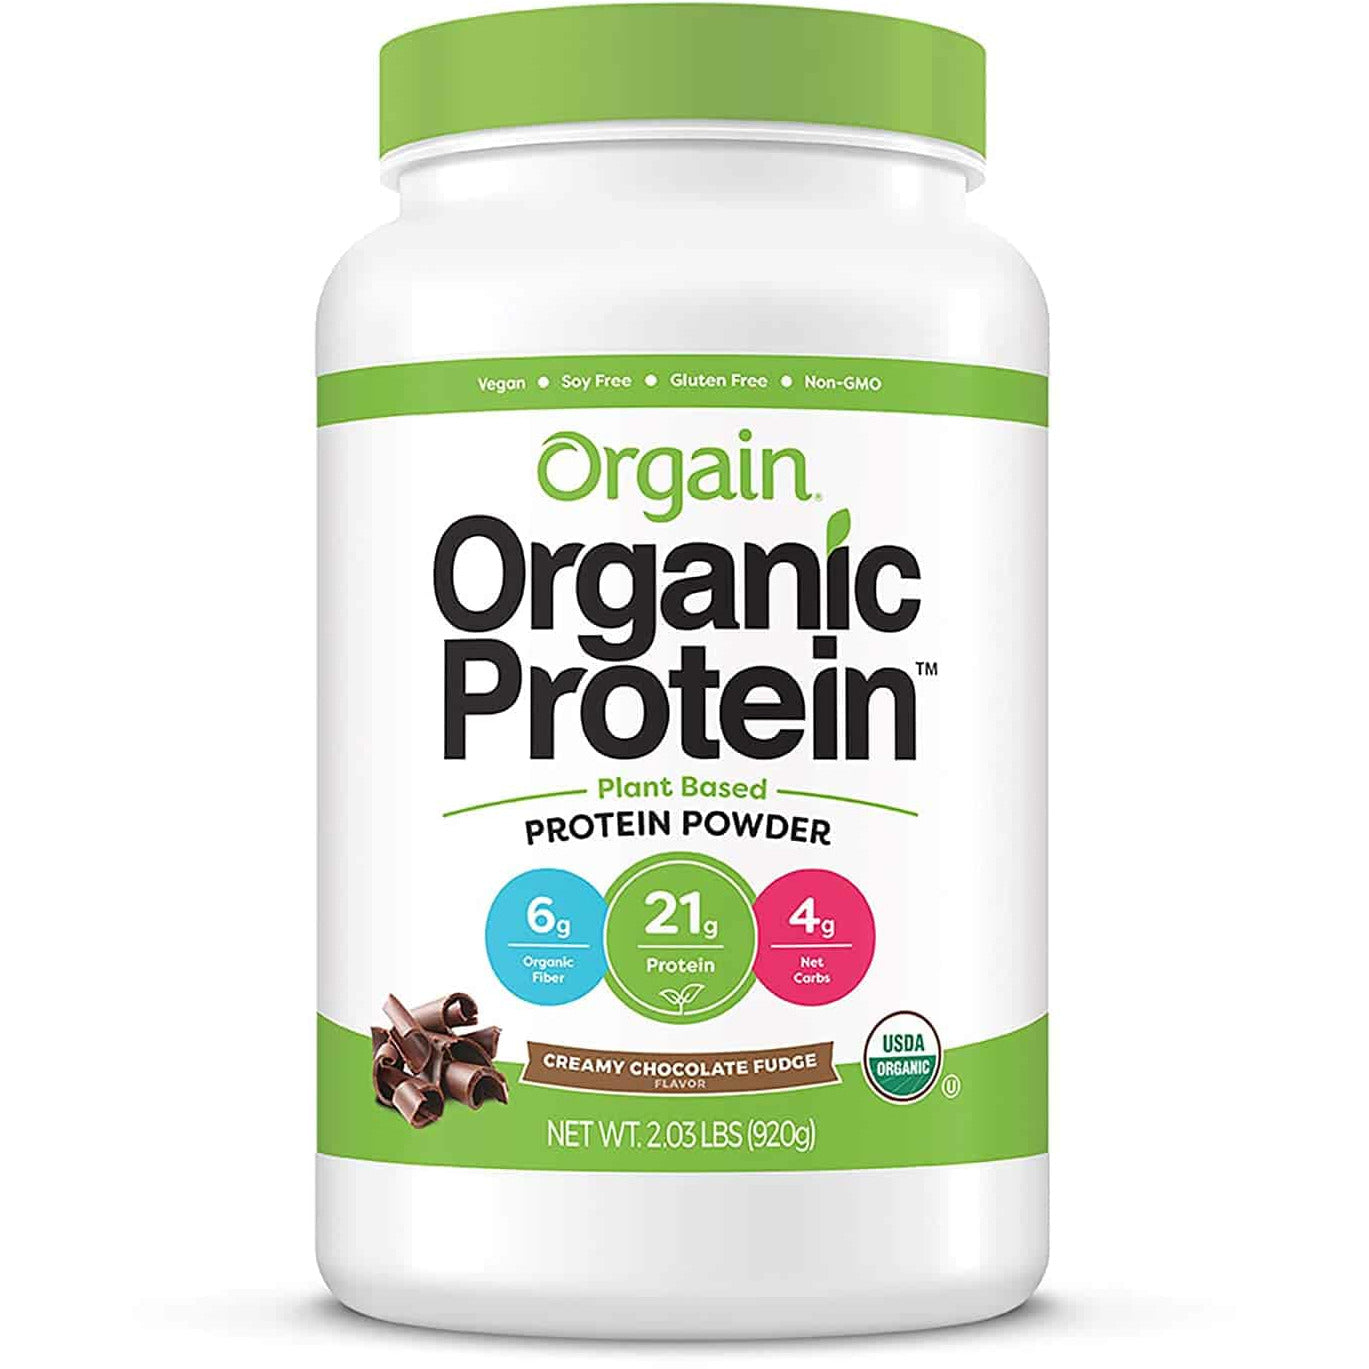 Organ Organic Plant Based Protein Powder, Creamy Chocolate Fudge